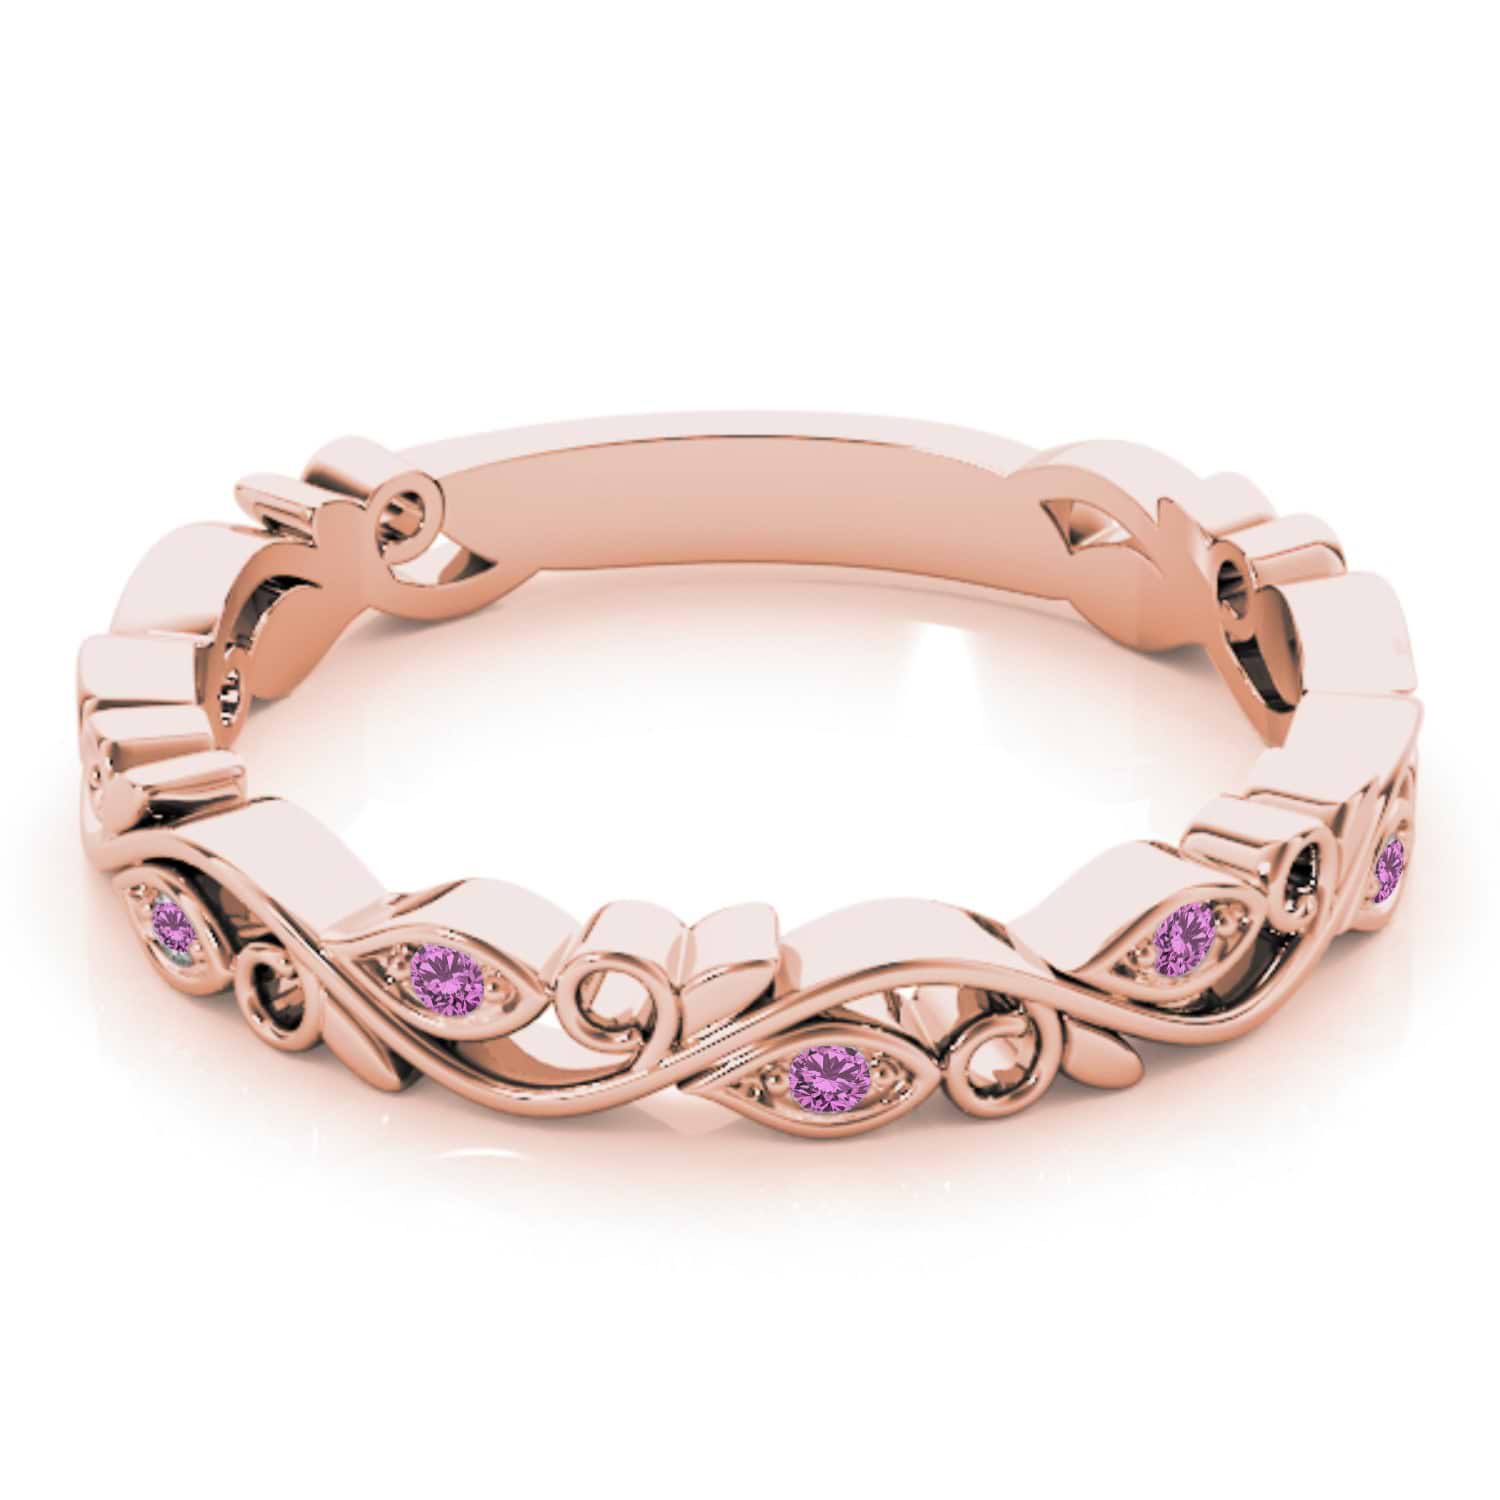 Pink Sapphire Leaf Fashion Ring Wedding Band 14k Rose Gold (0.05ct)